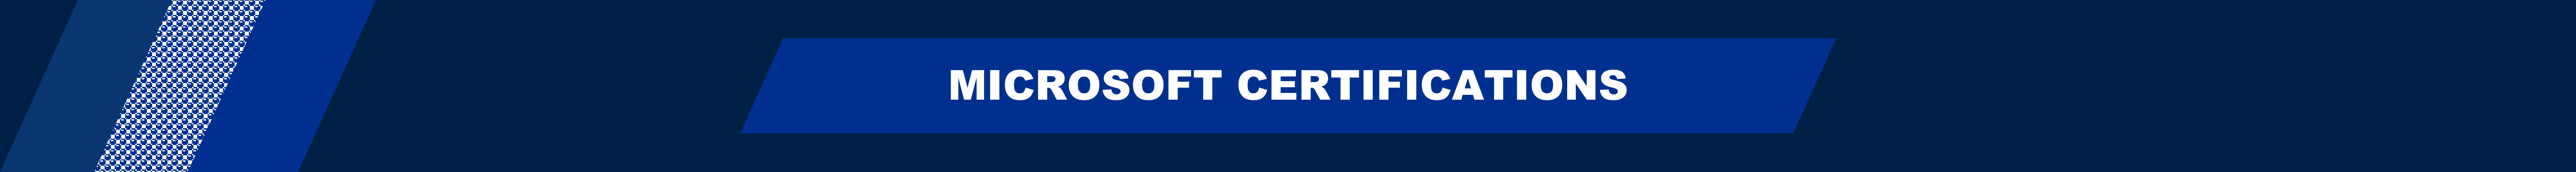 Microsoft Certifications Header